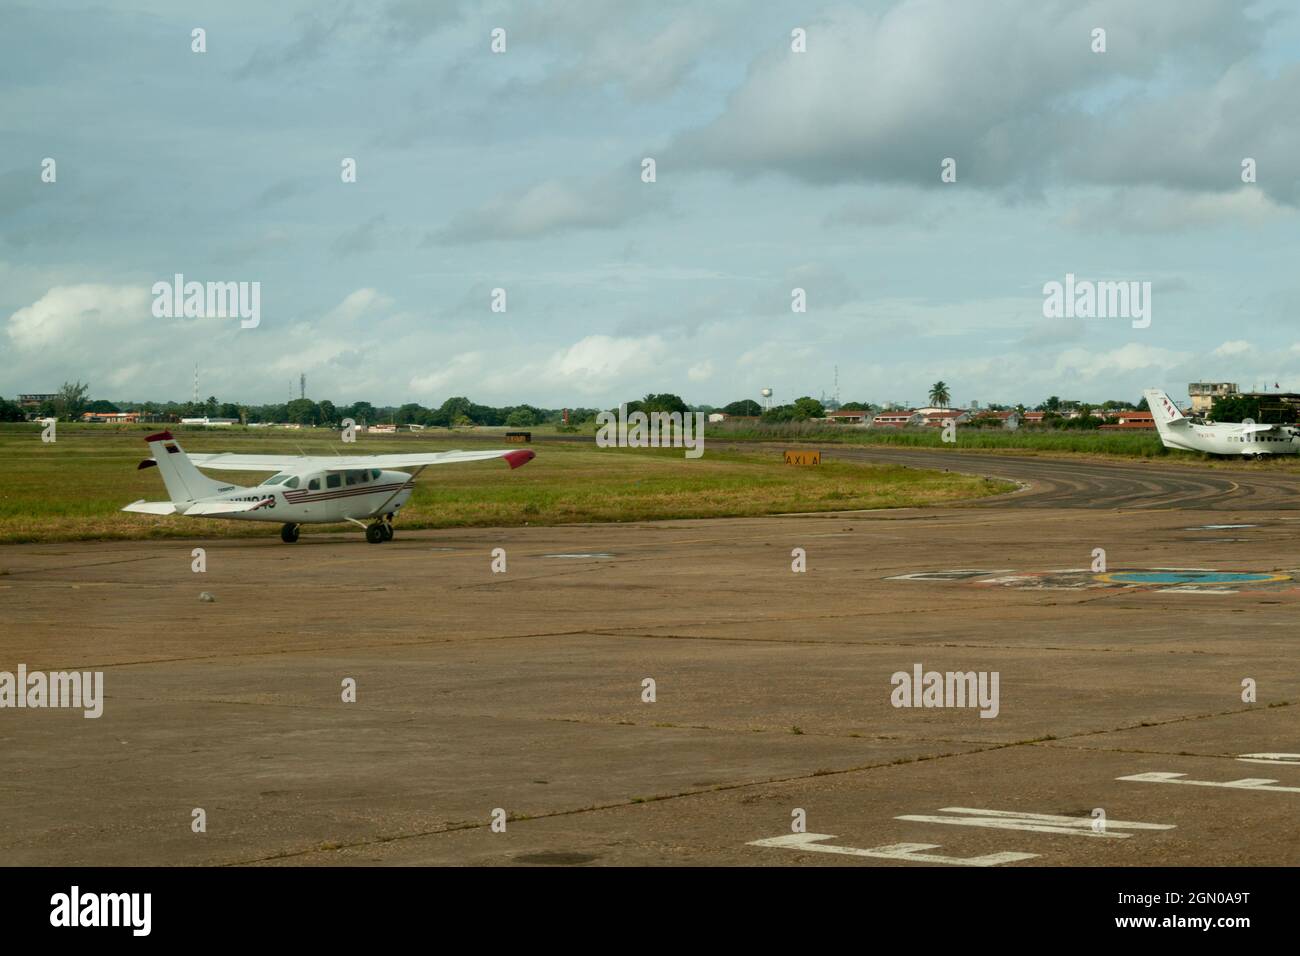 CIUDAD BOLIVAR, VENEZUELA - AUGUST 16, 2015: Airplanes at the airport of Ciudad Bolivar, Venezuela Stock Photo